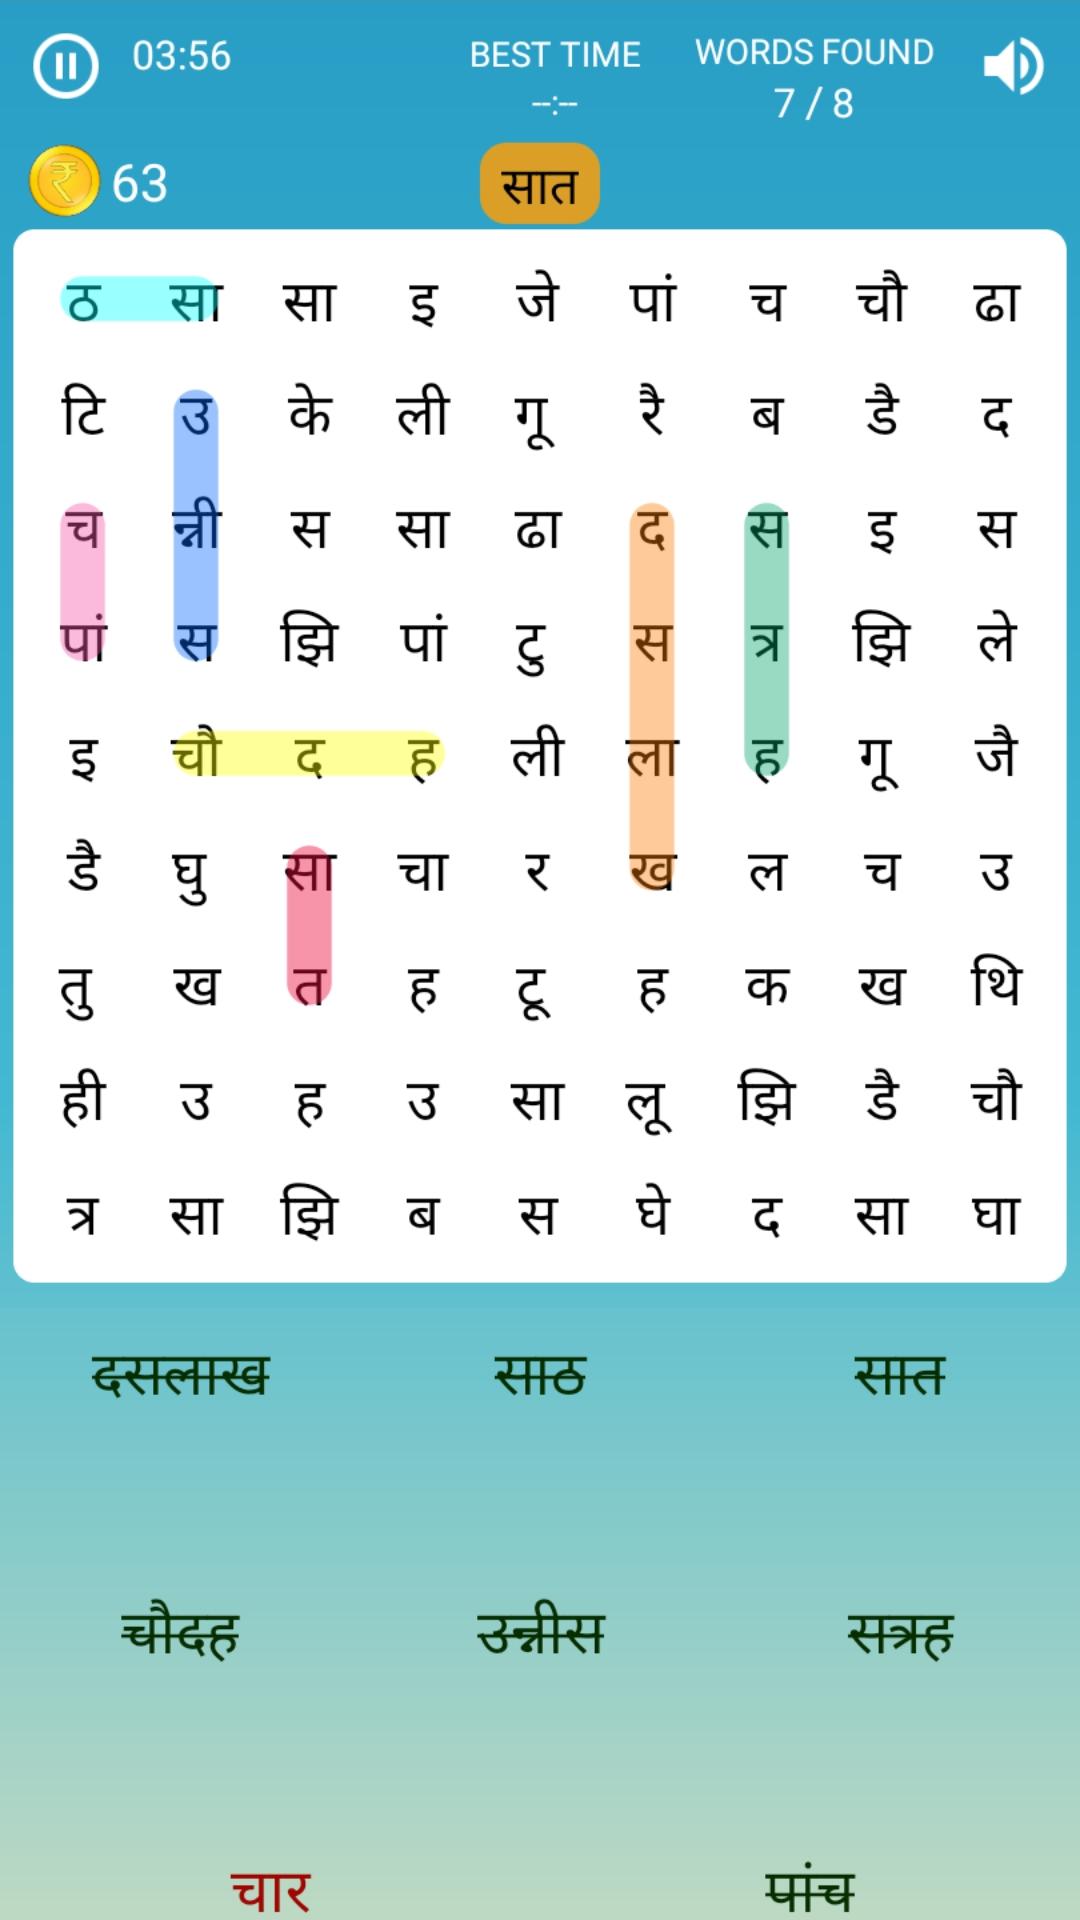 Hindi Word Search Game 2.2 Screenshot 13